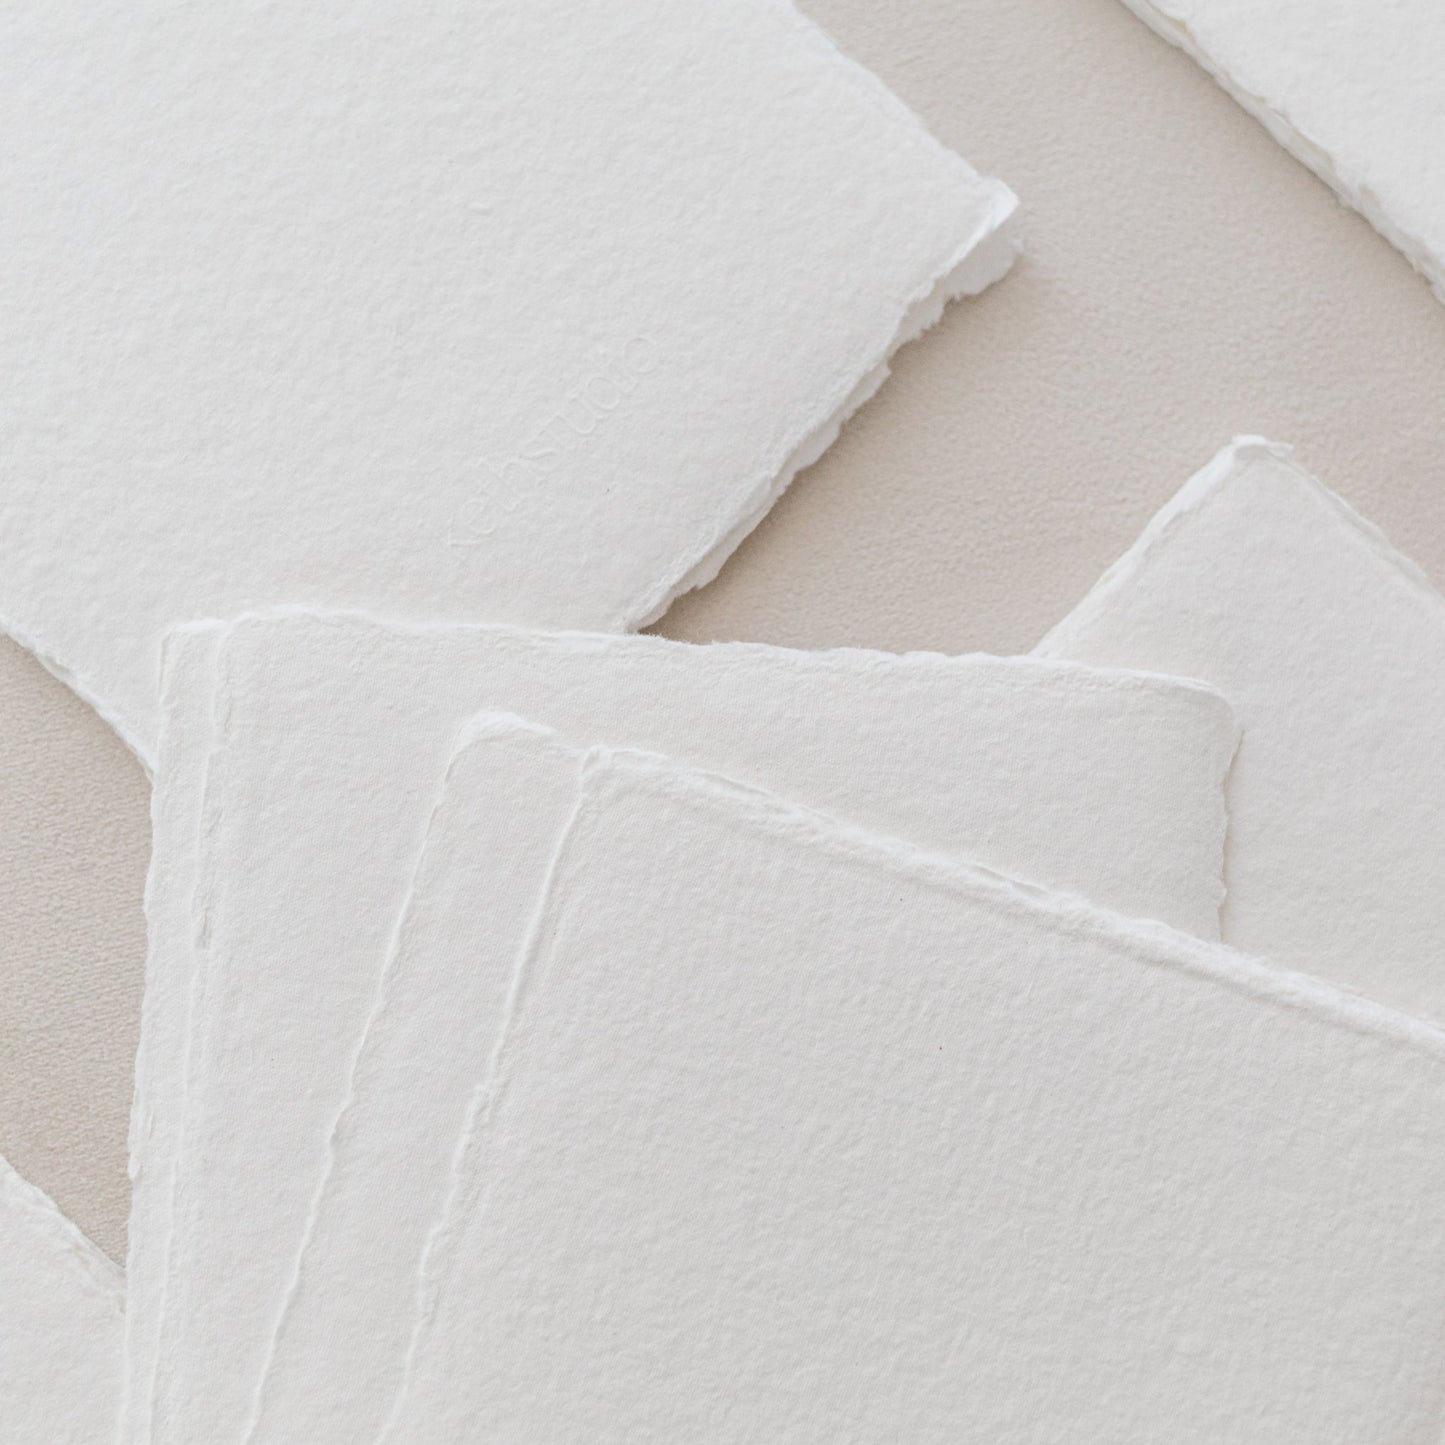 A4 – White Handmade Paper